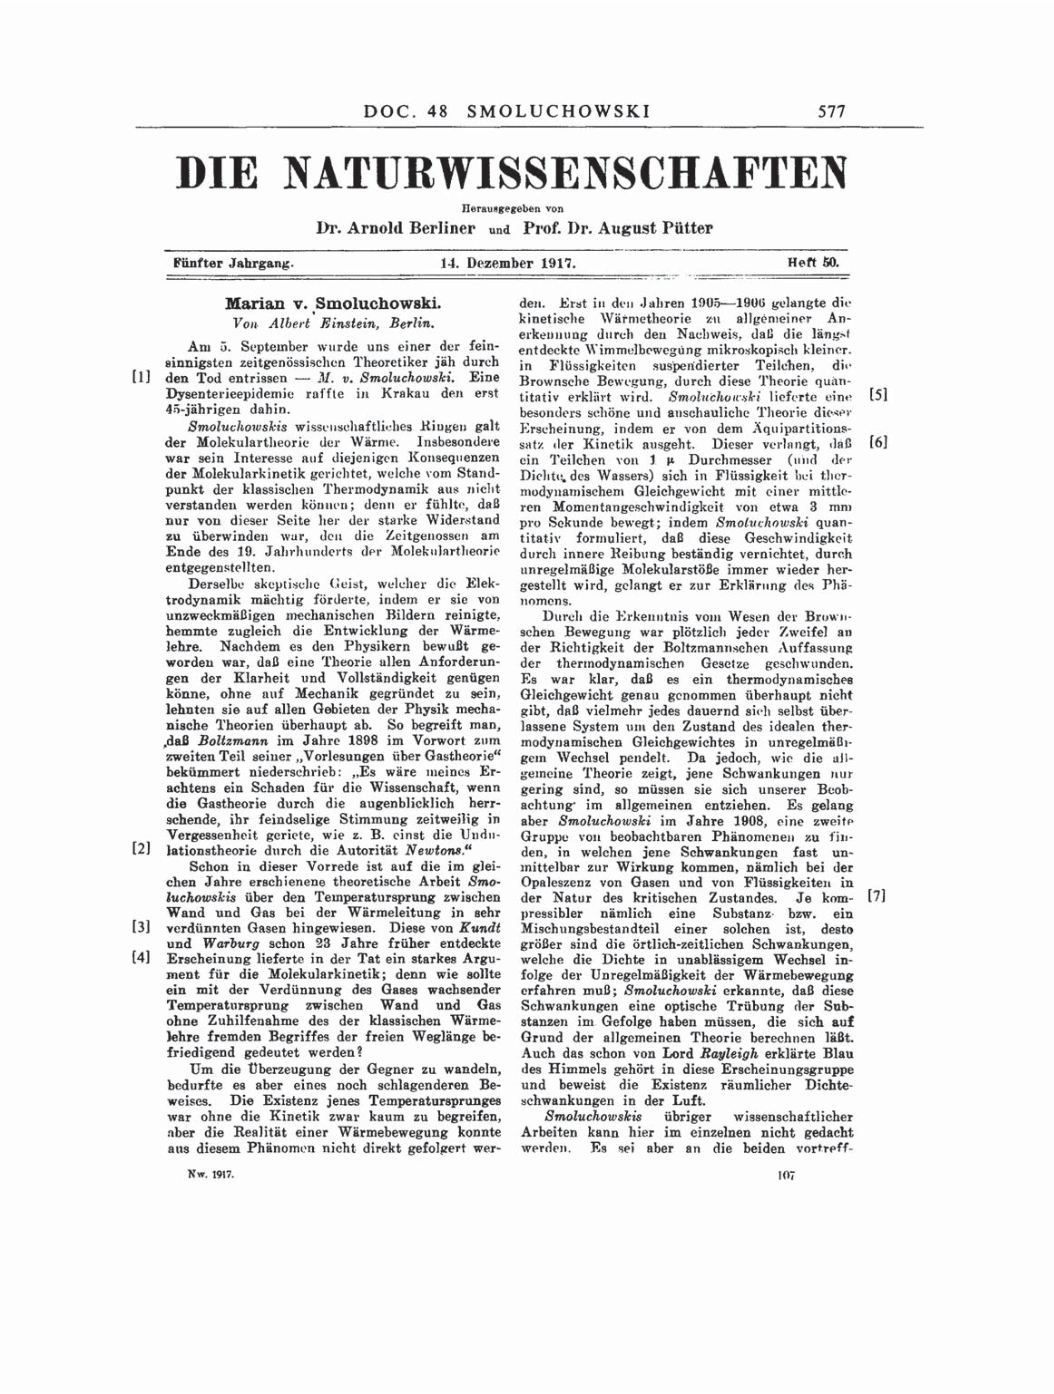 Volume 6: The Berlin Years: Writings, 1914-1917 page 577